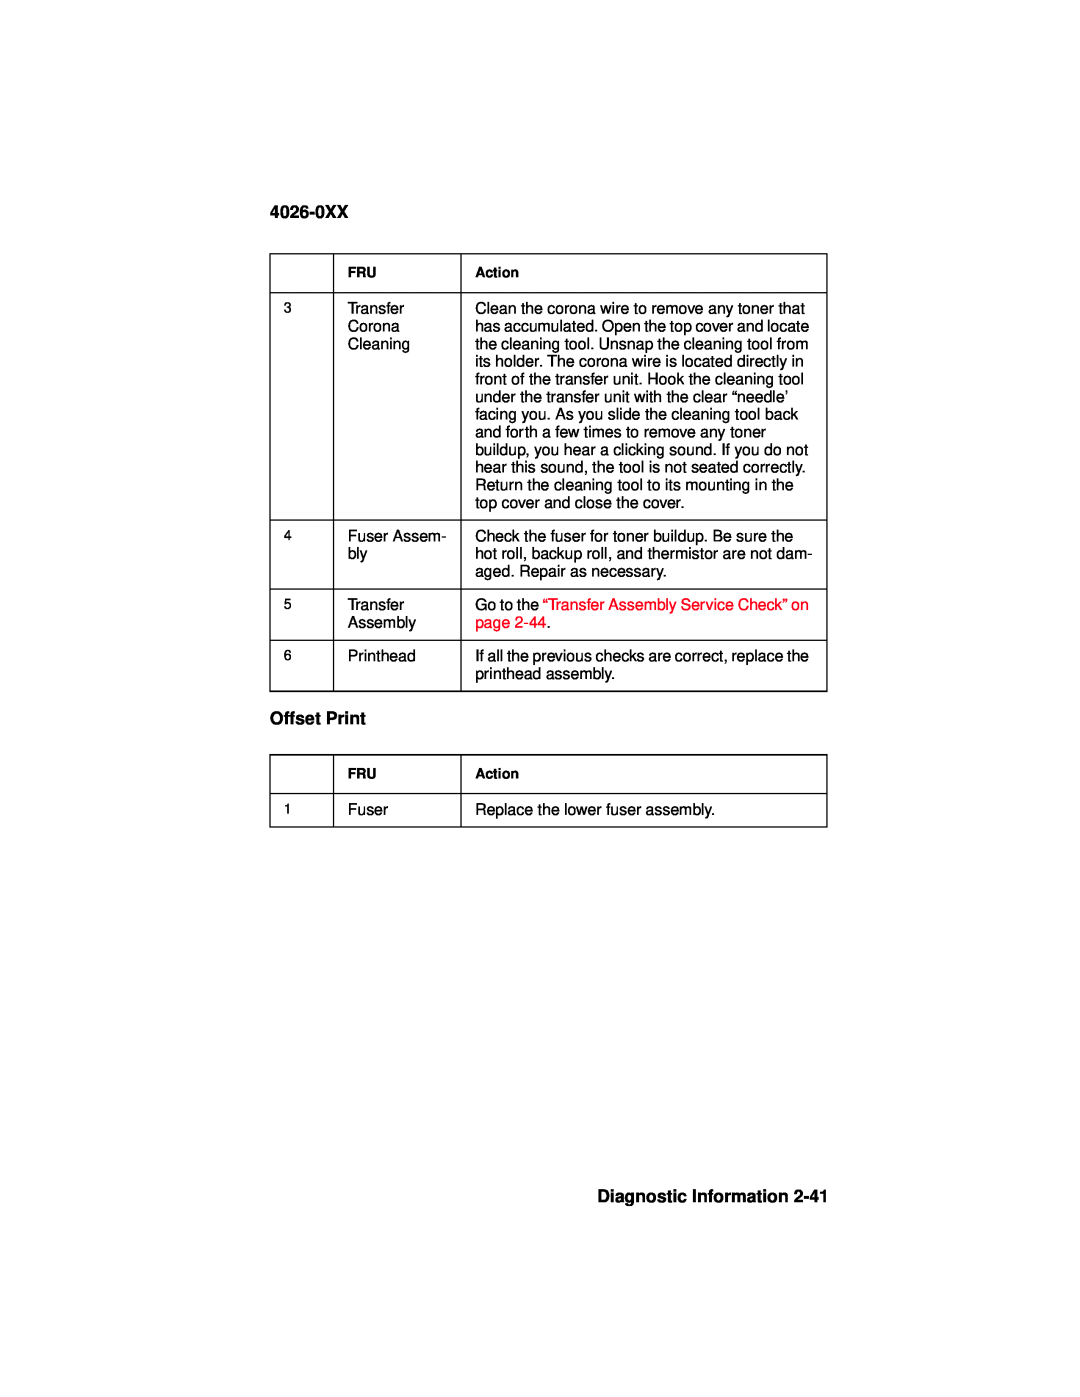 Lexmark OptraTM manual Offset Print, 4026-0XX, Diagnostic Information 